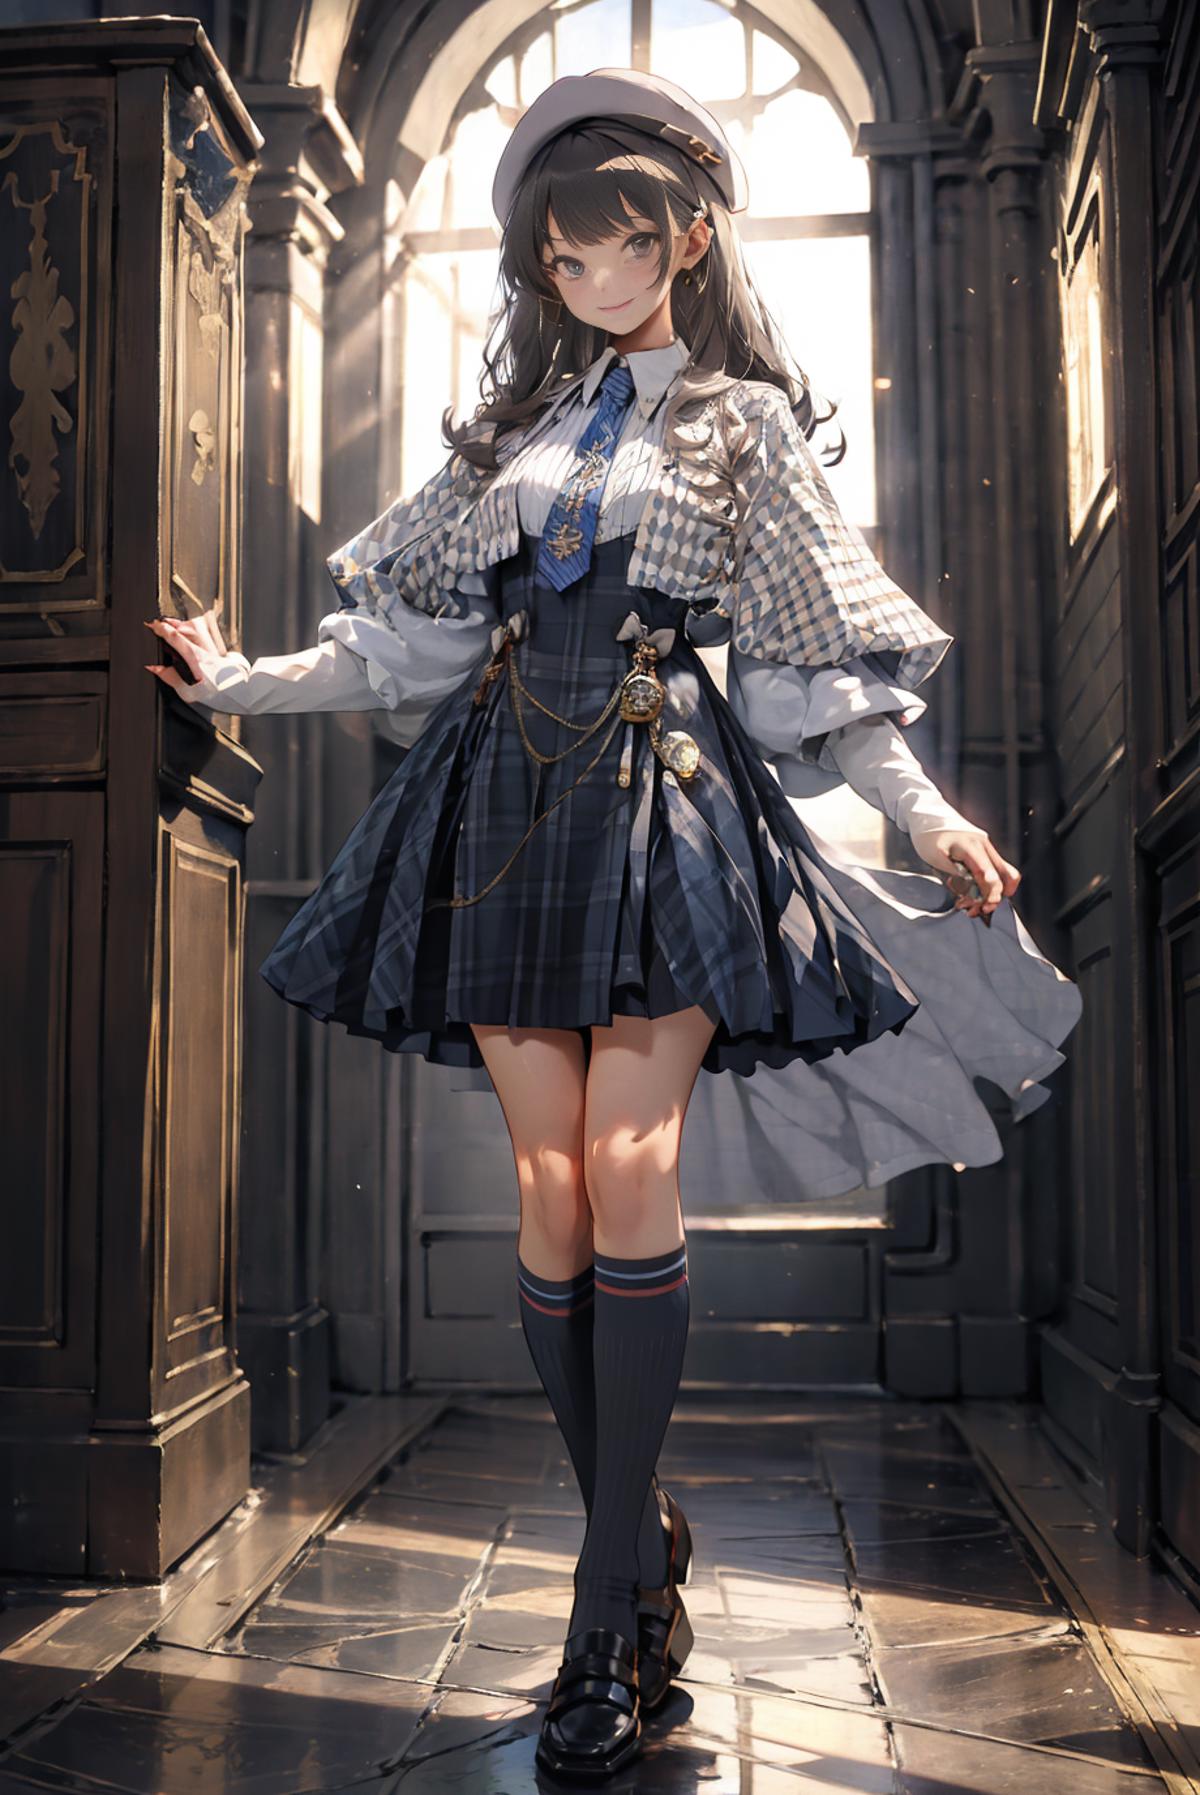 Magical girl costume | 魔法少女装  image by cyberAngel_